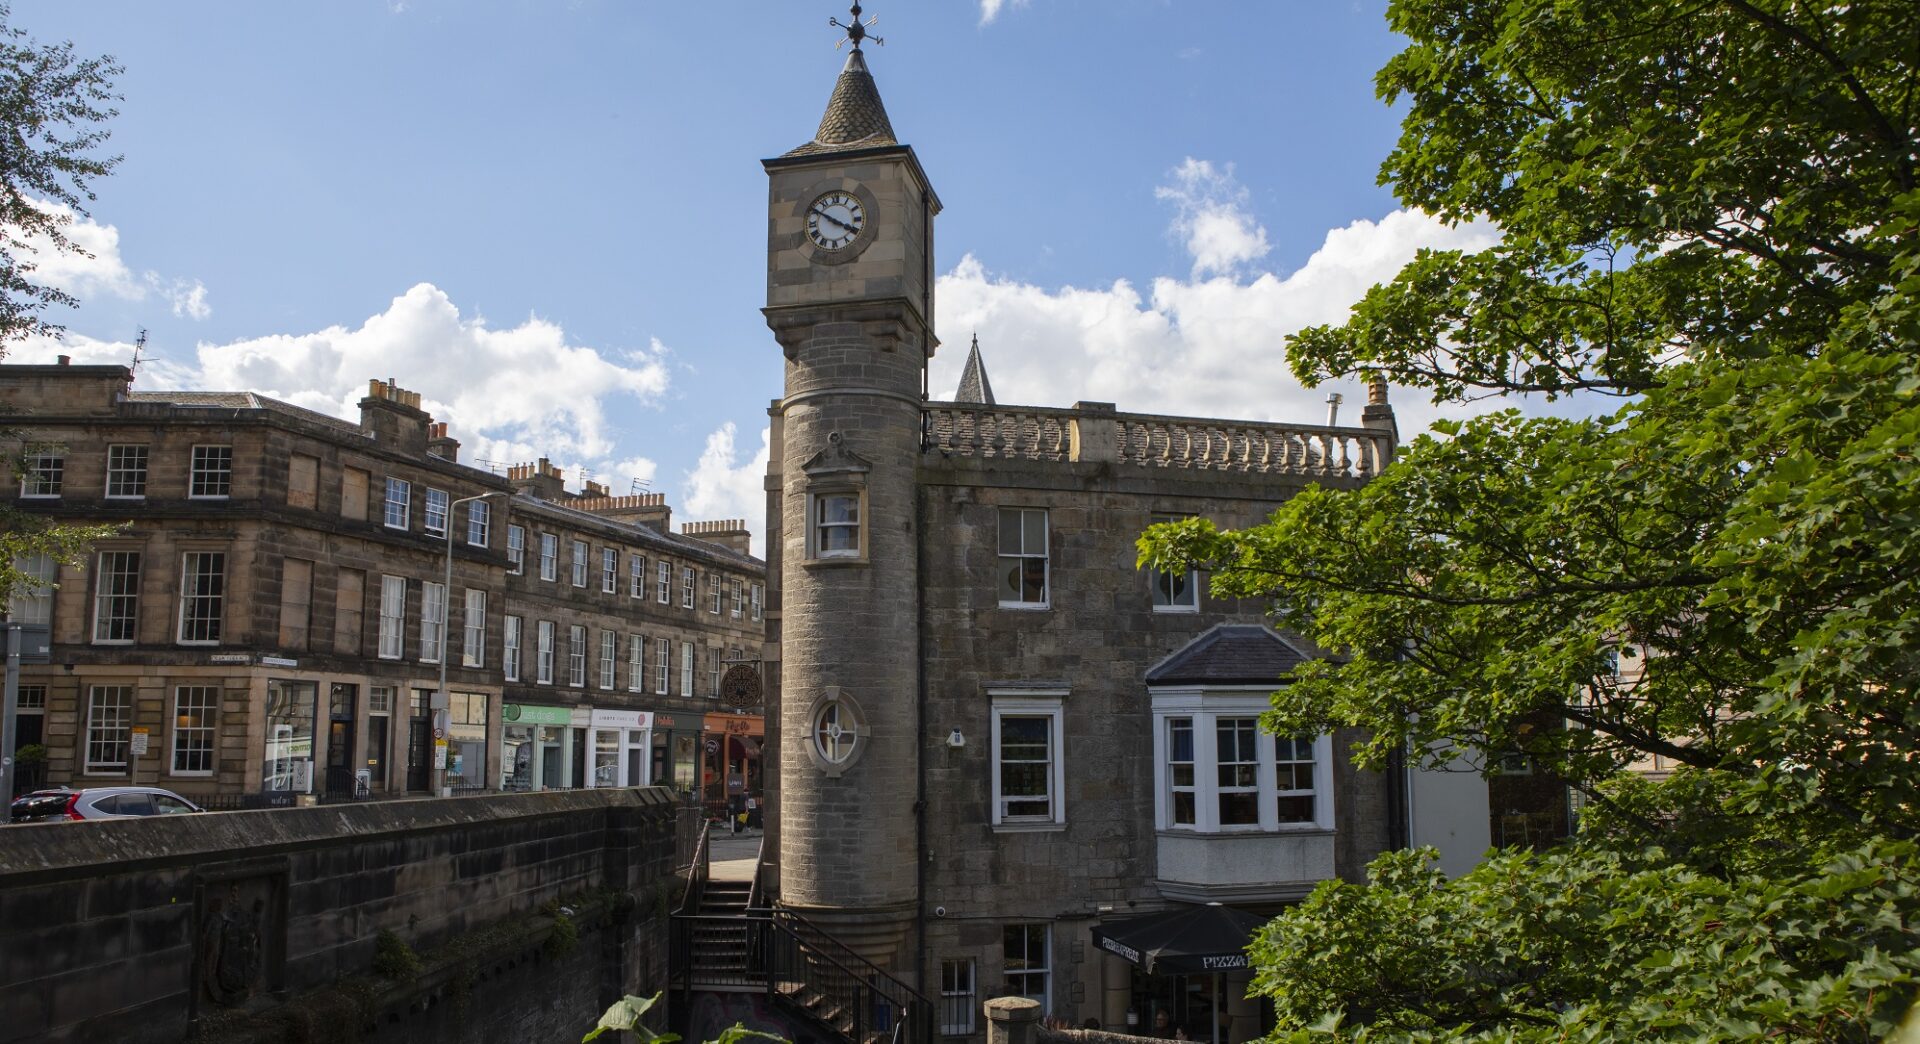 Stockbridge Old Clock Tower